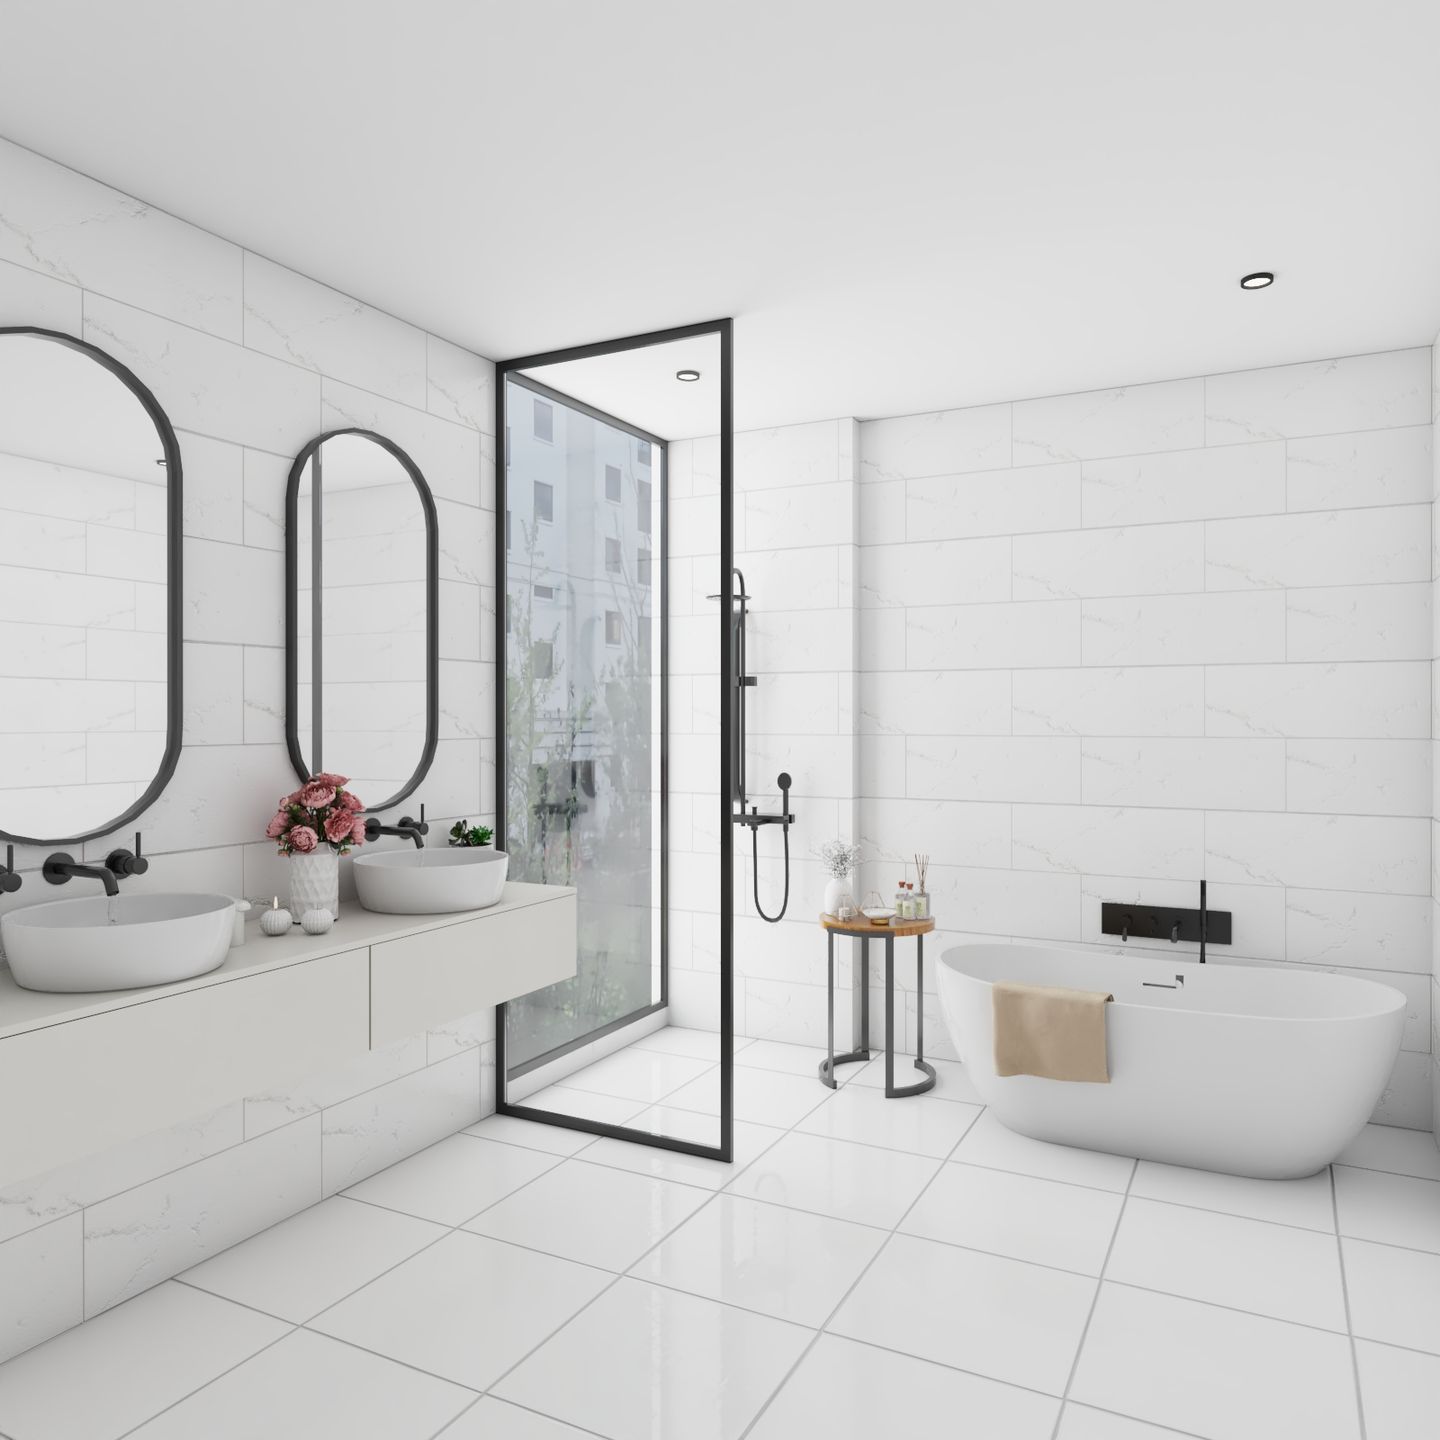 White Bathroom Design With Oval Mirror - Livspace